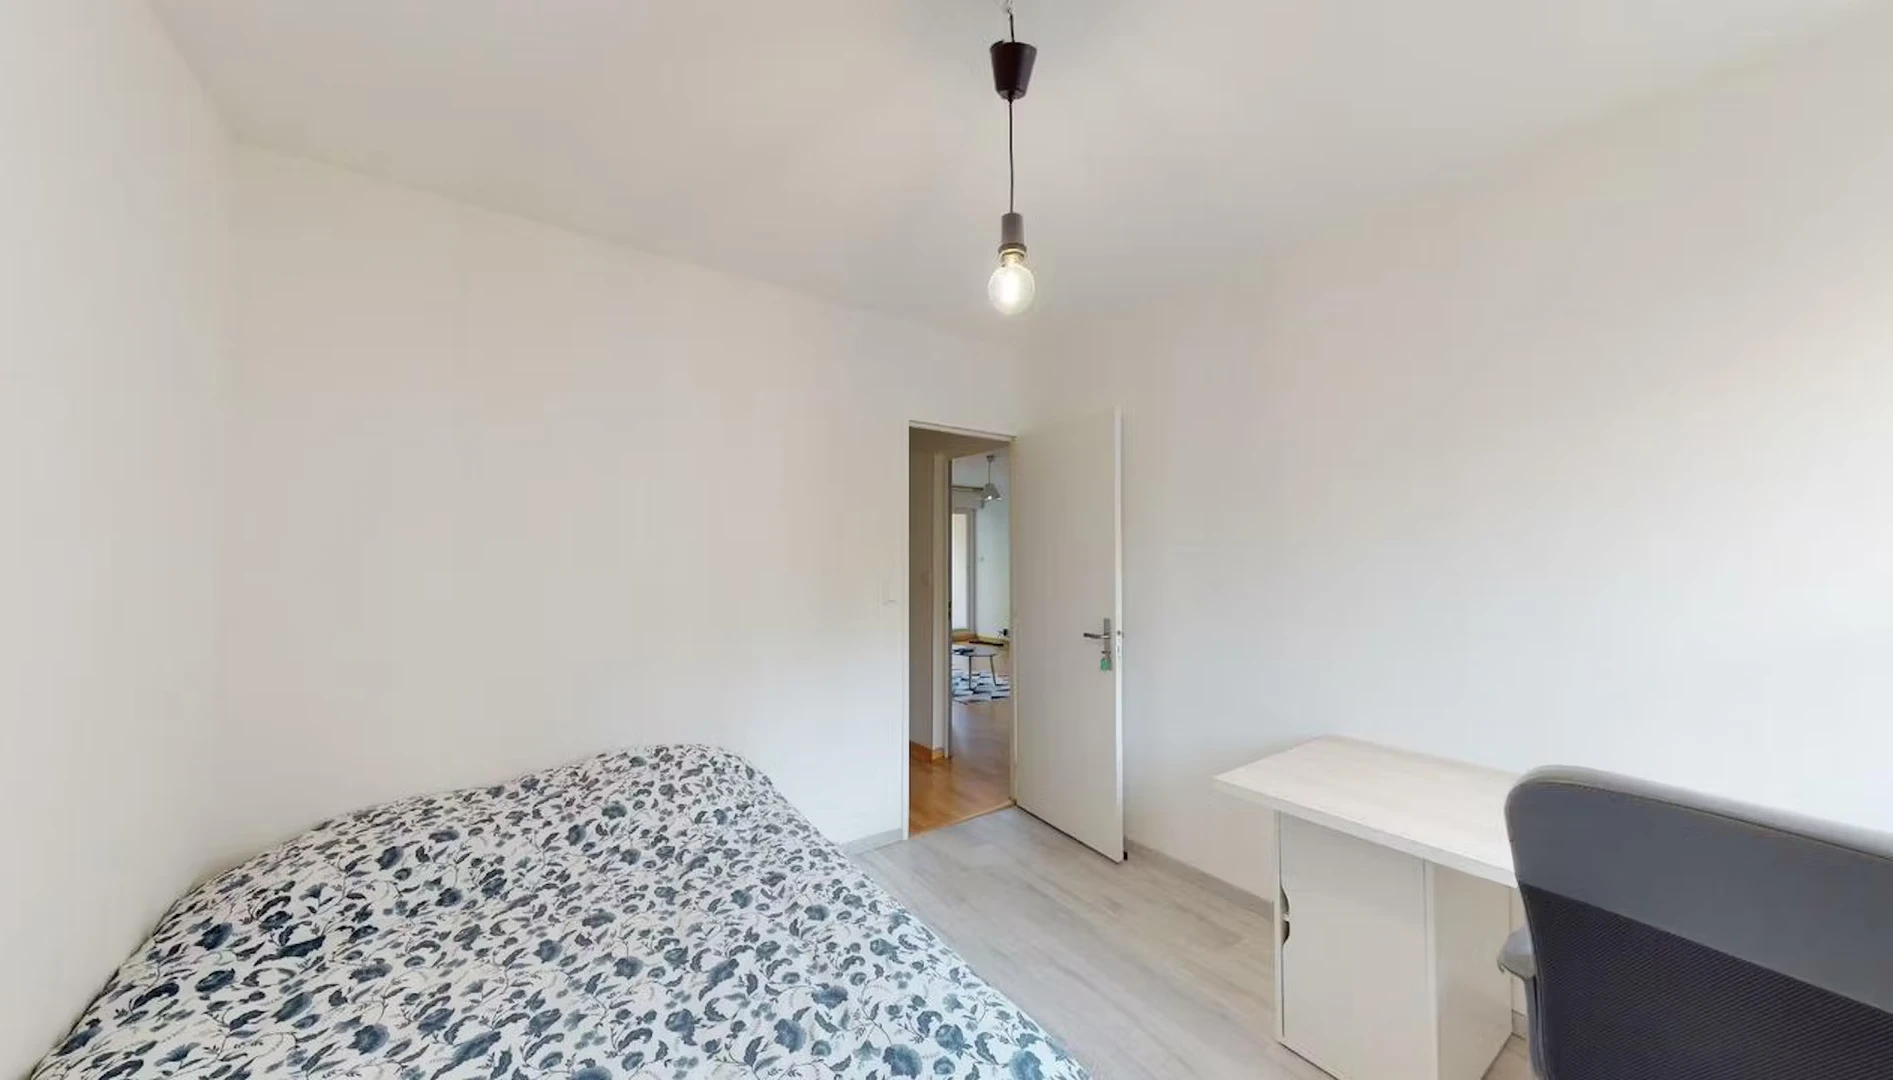 Cheap private room in Besançon